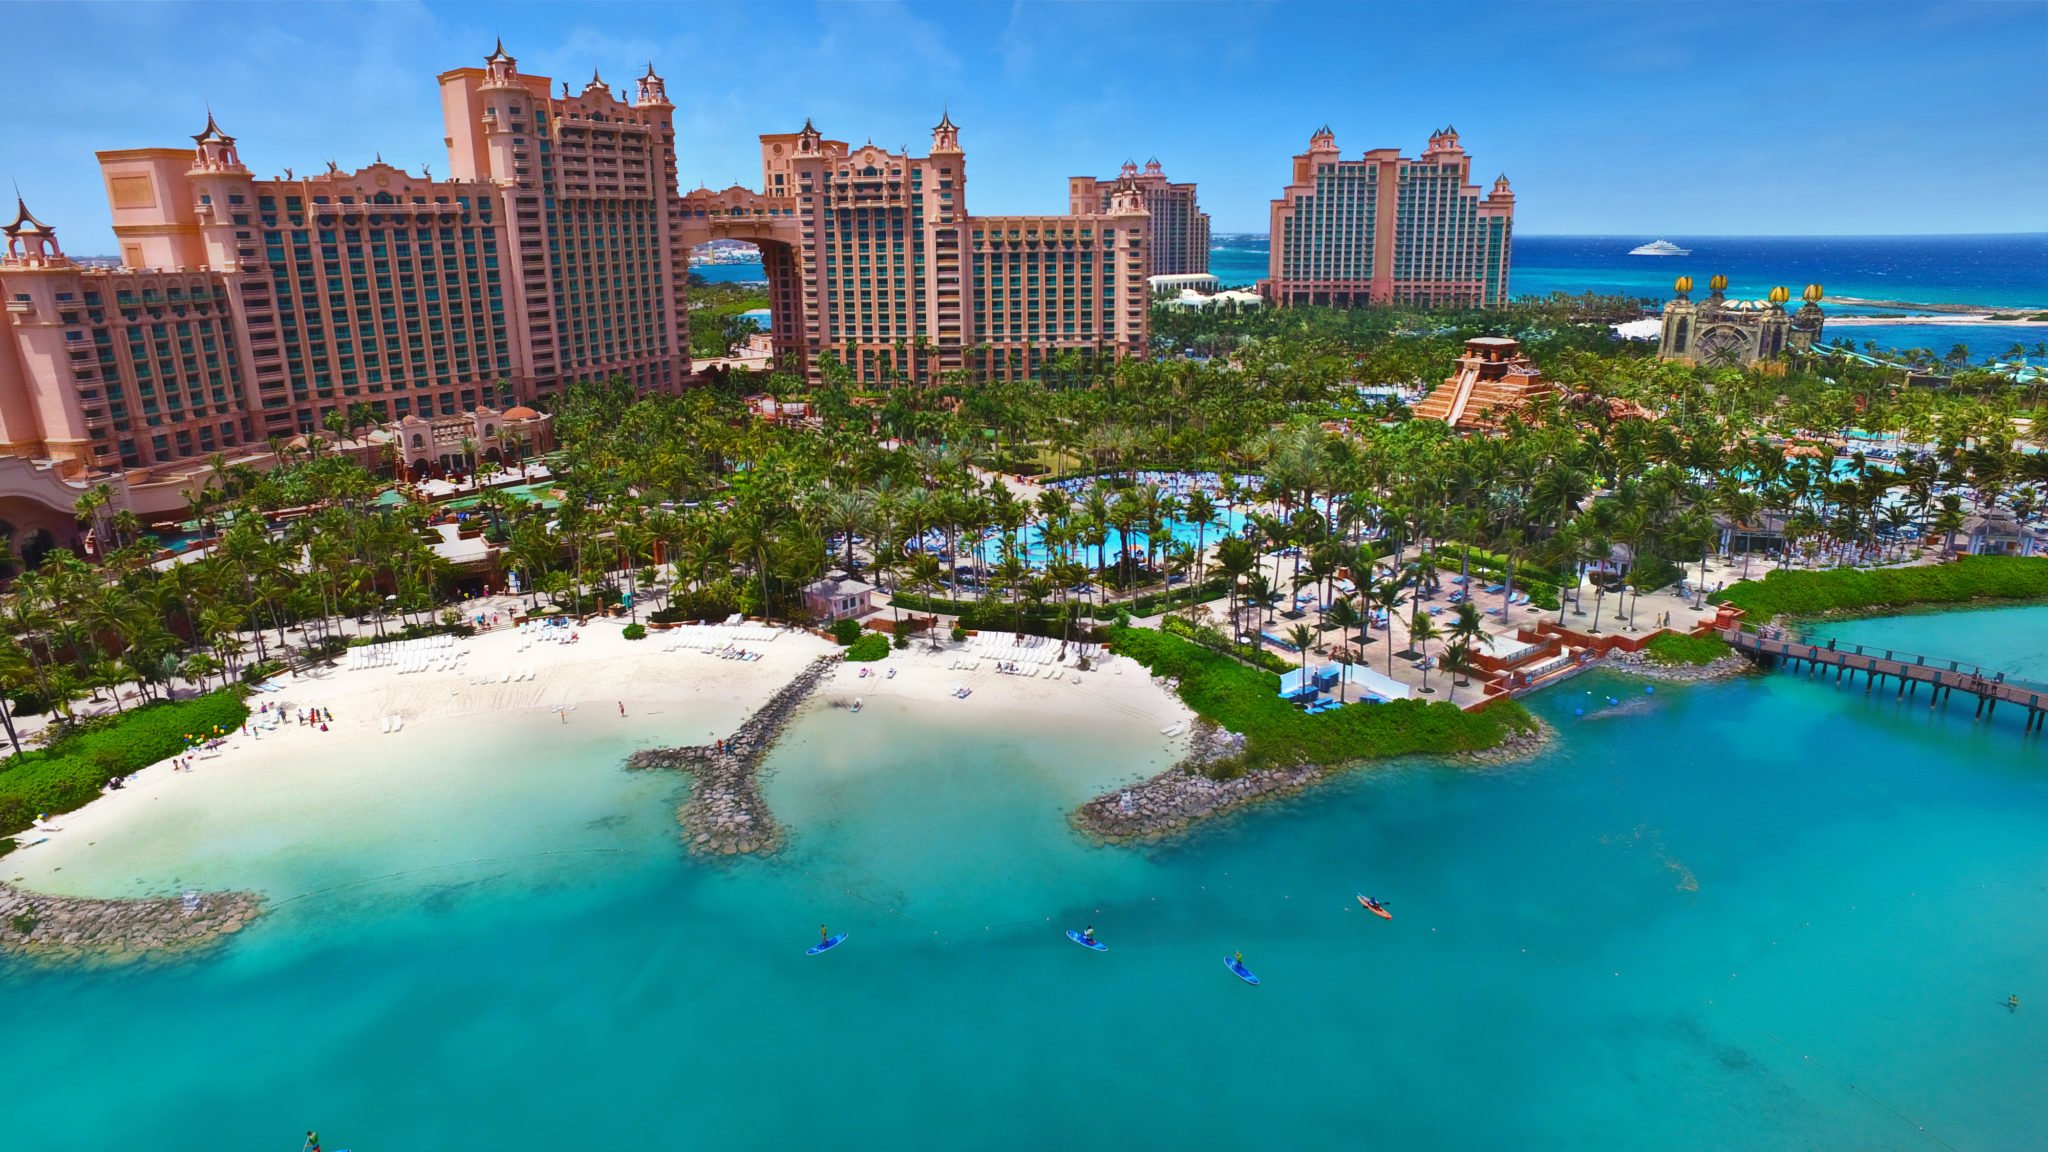 LuxeGetaways - Luxury Travel - Luxury Travel Magazine - Luxe Getaways - Luxury Lifestyle - Atlantis Paradise Island - Bahamas - Caribbean